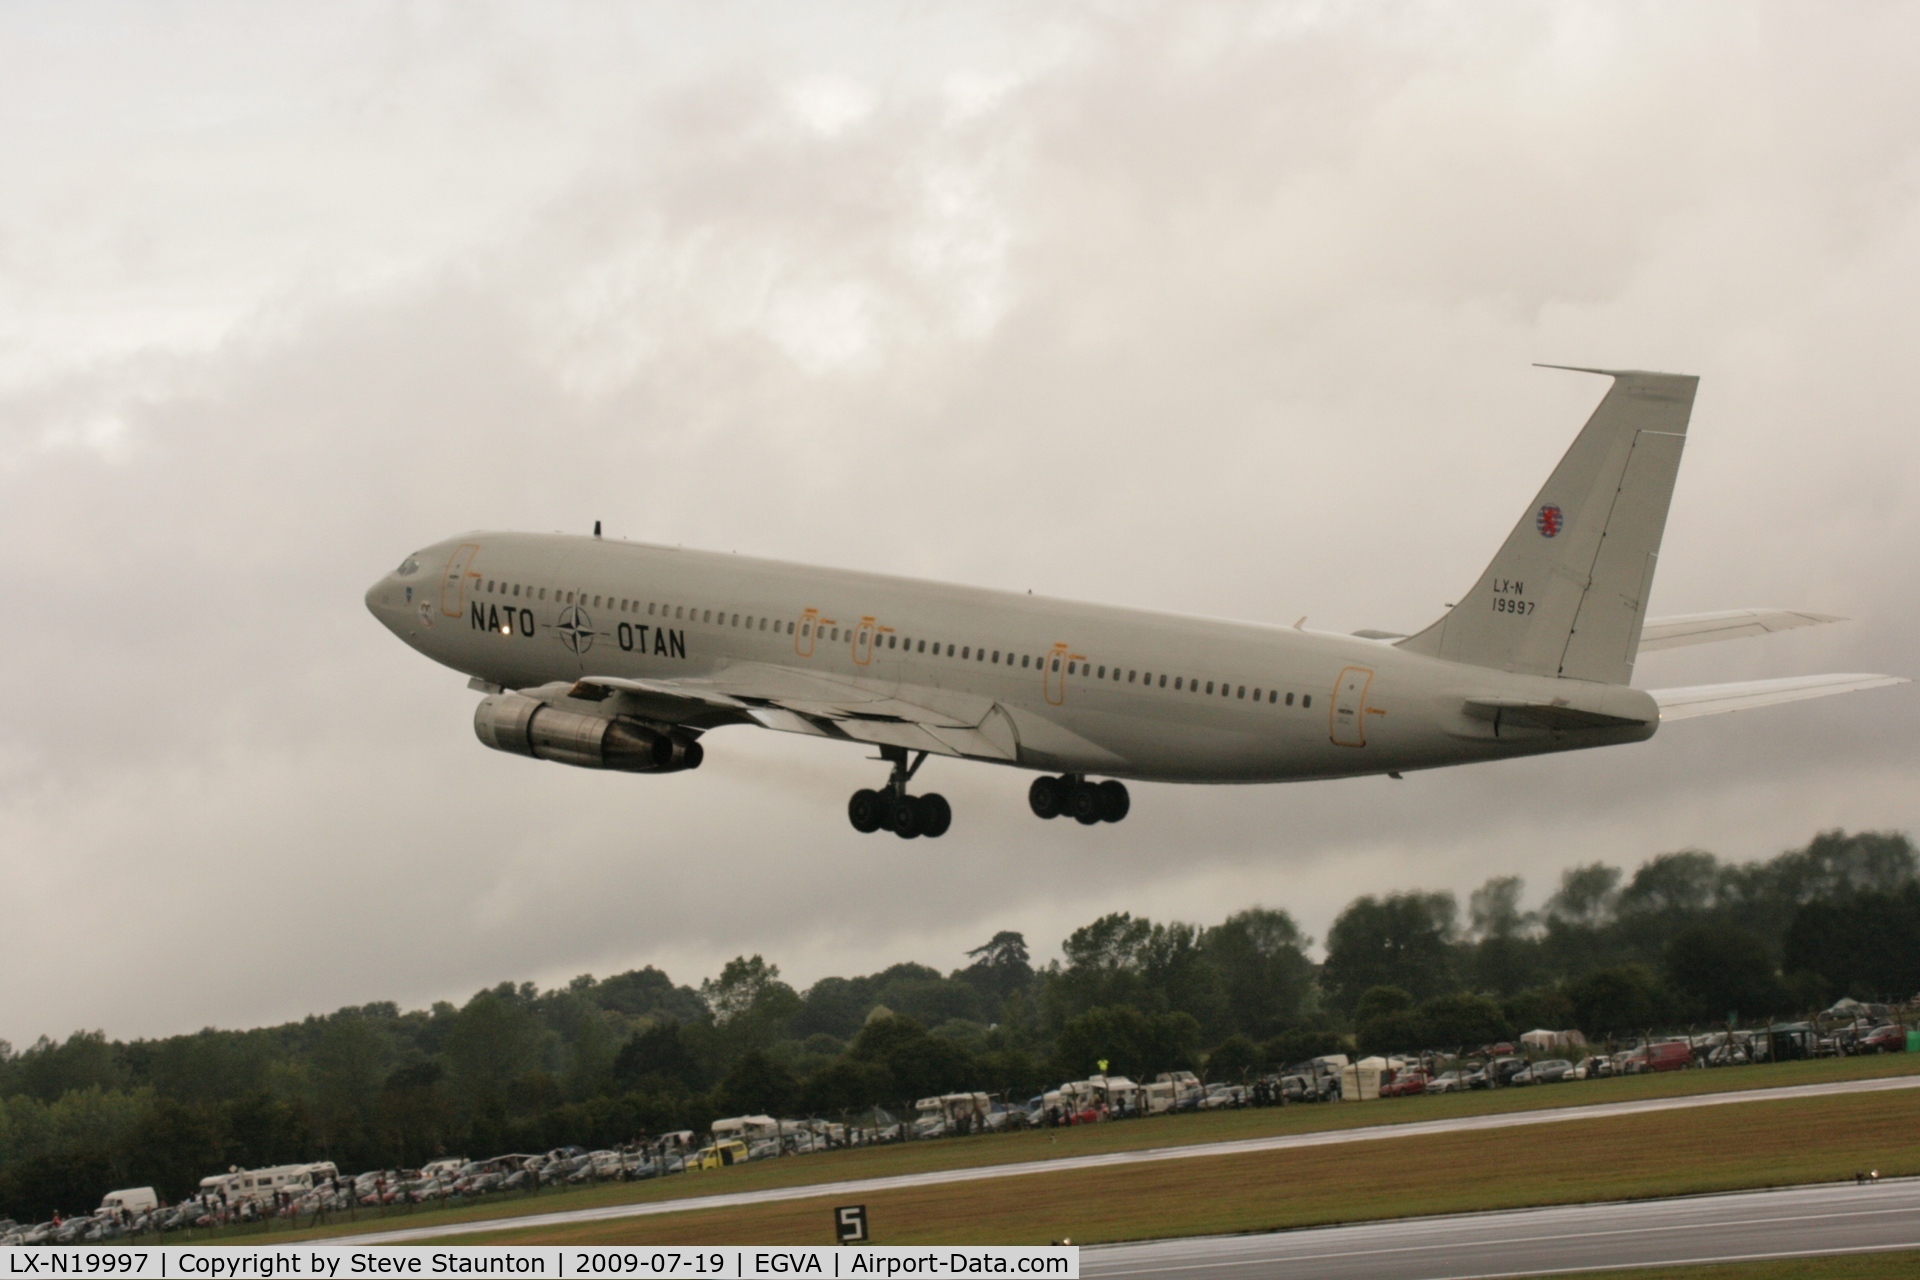 LX-N19997, 1968 Boeing 707-307C C/N 19997, Taken at the Royal International Air Tattoo 2009